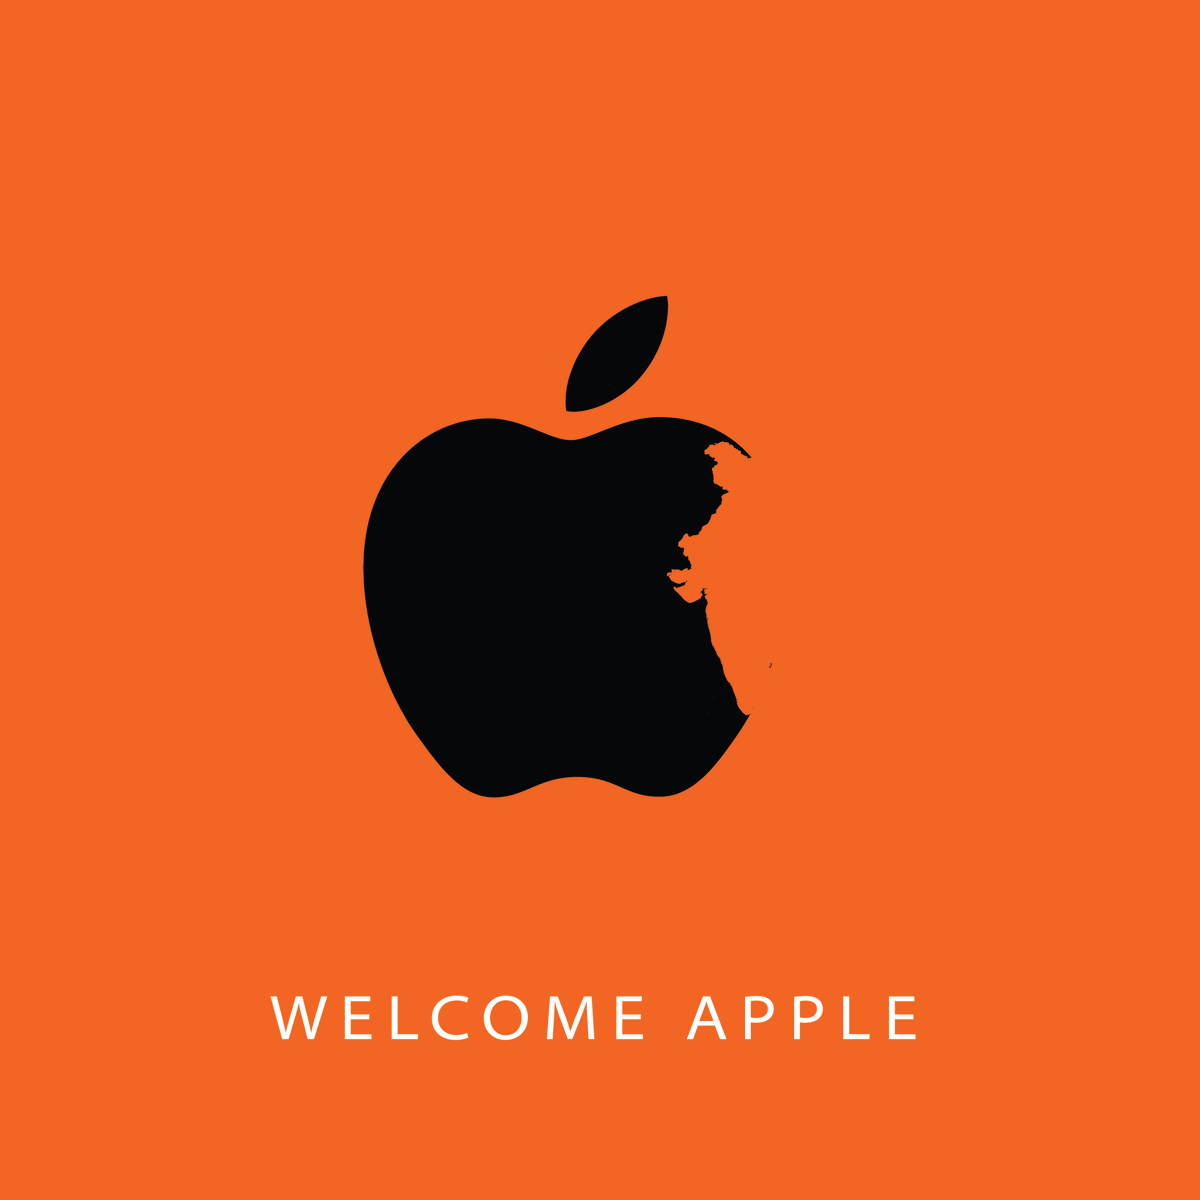 Welcome @Apple 
#TimCook #TimCookInIndia